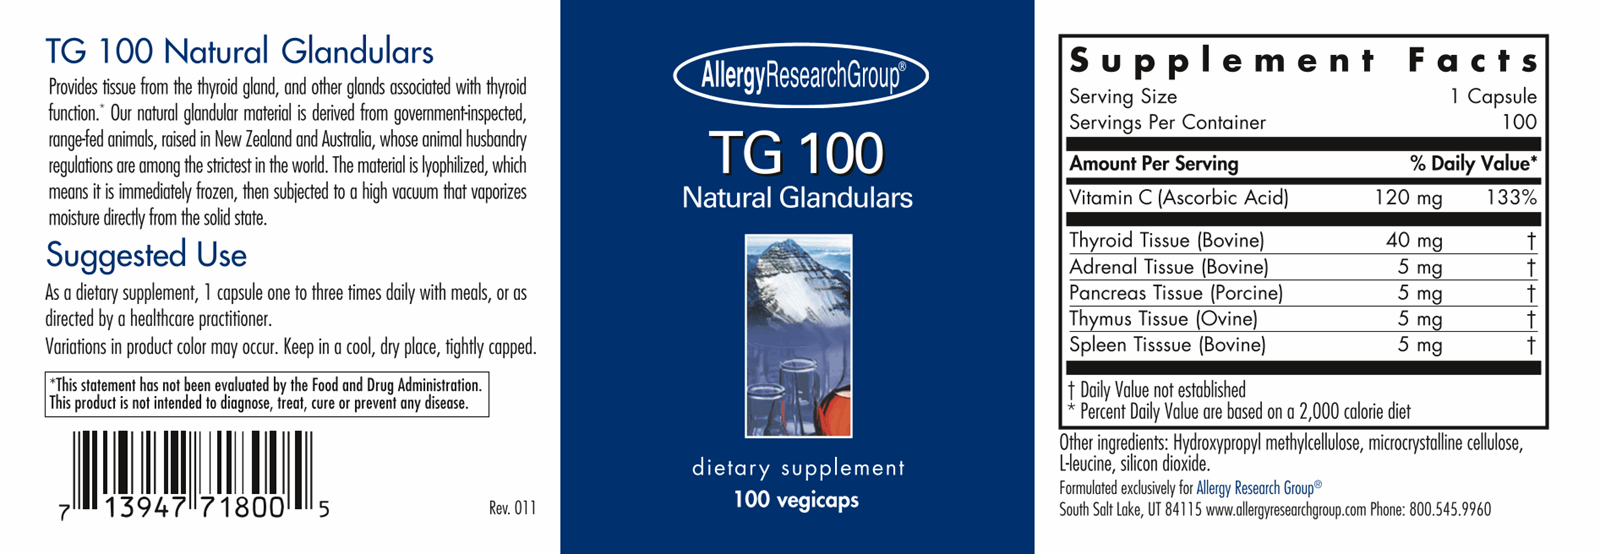 TG 100 